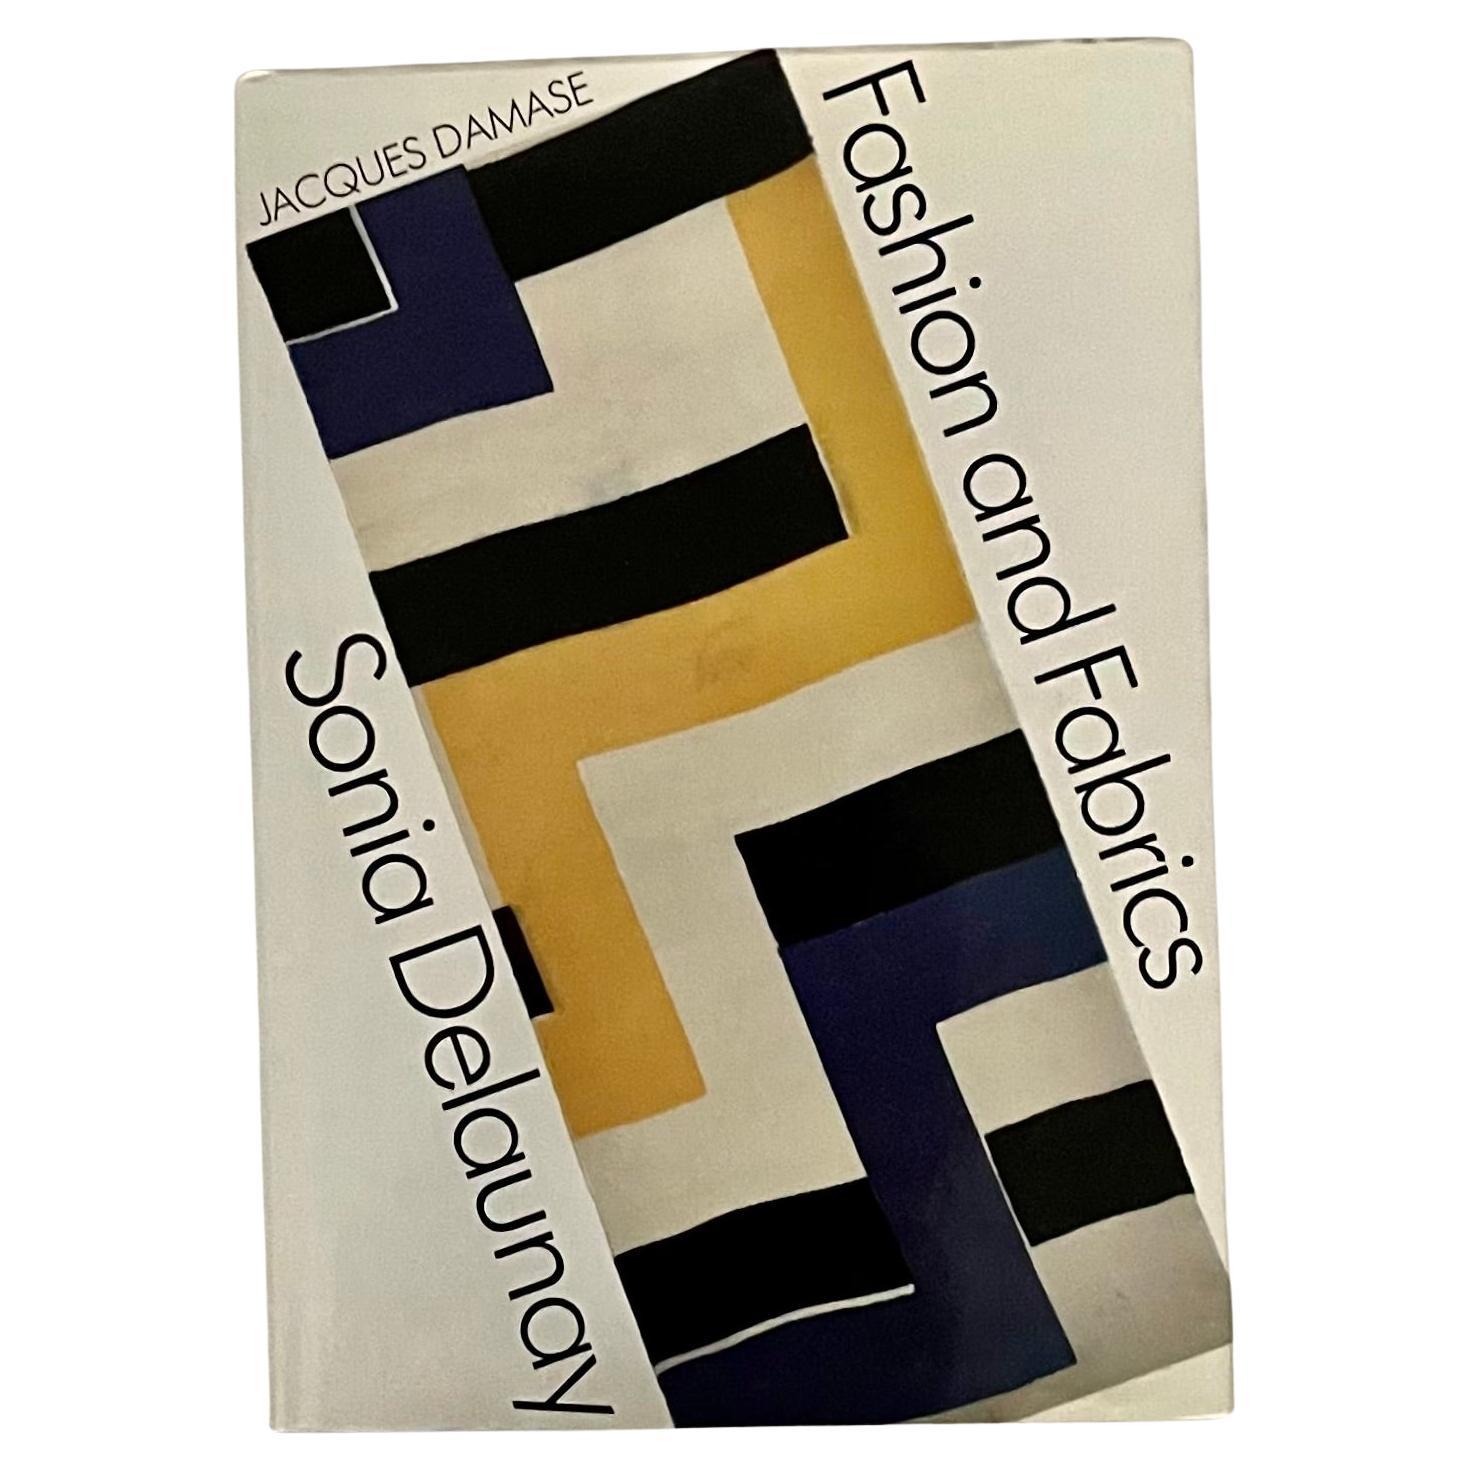 SONIA DELAUNAY: Fashion and Fabrics - Jacques Damase - 1st edition, 1991